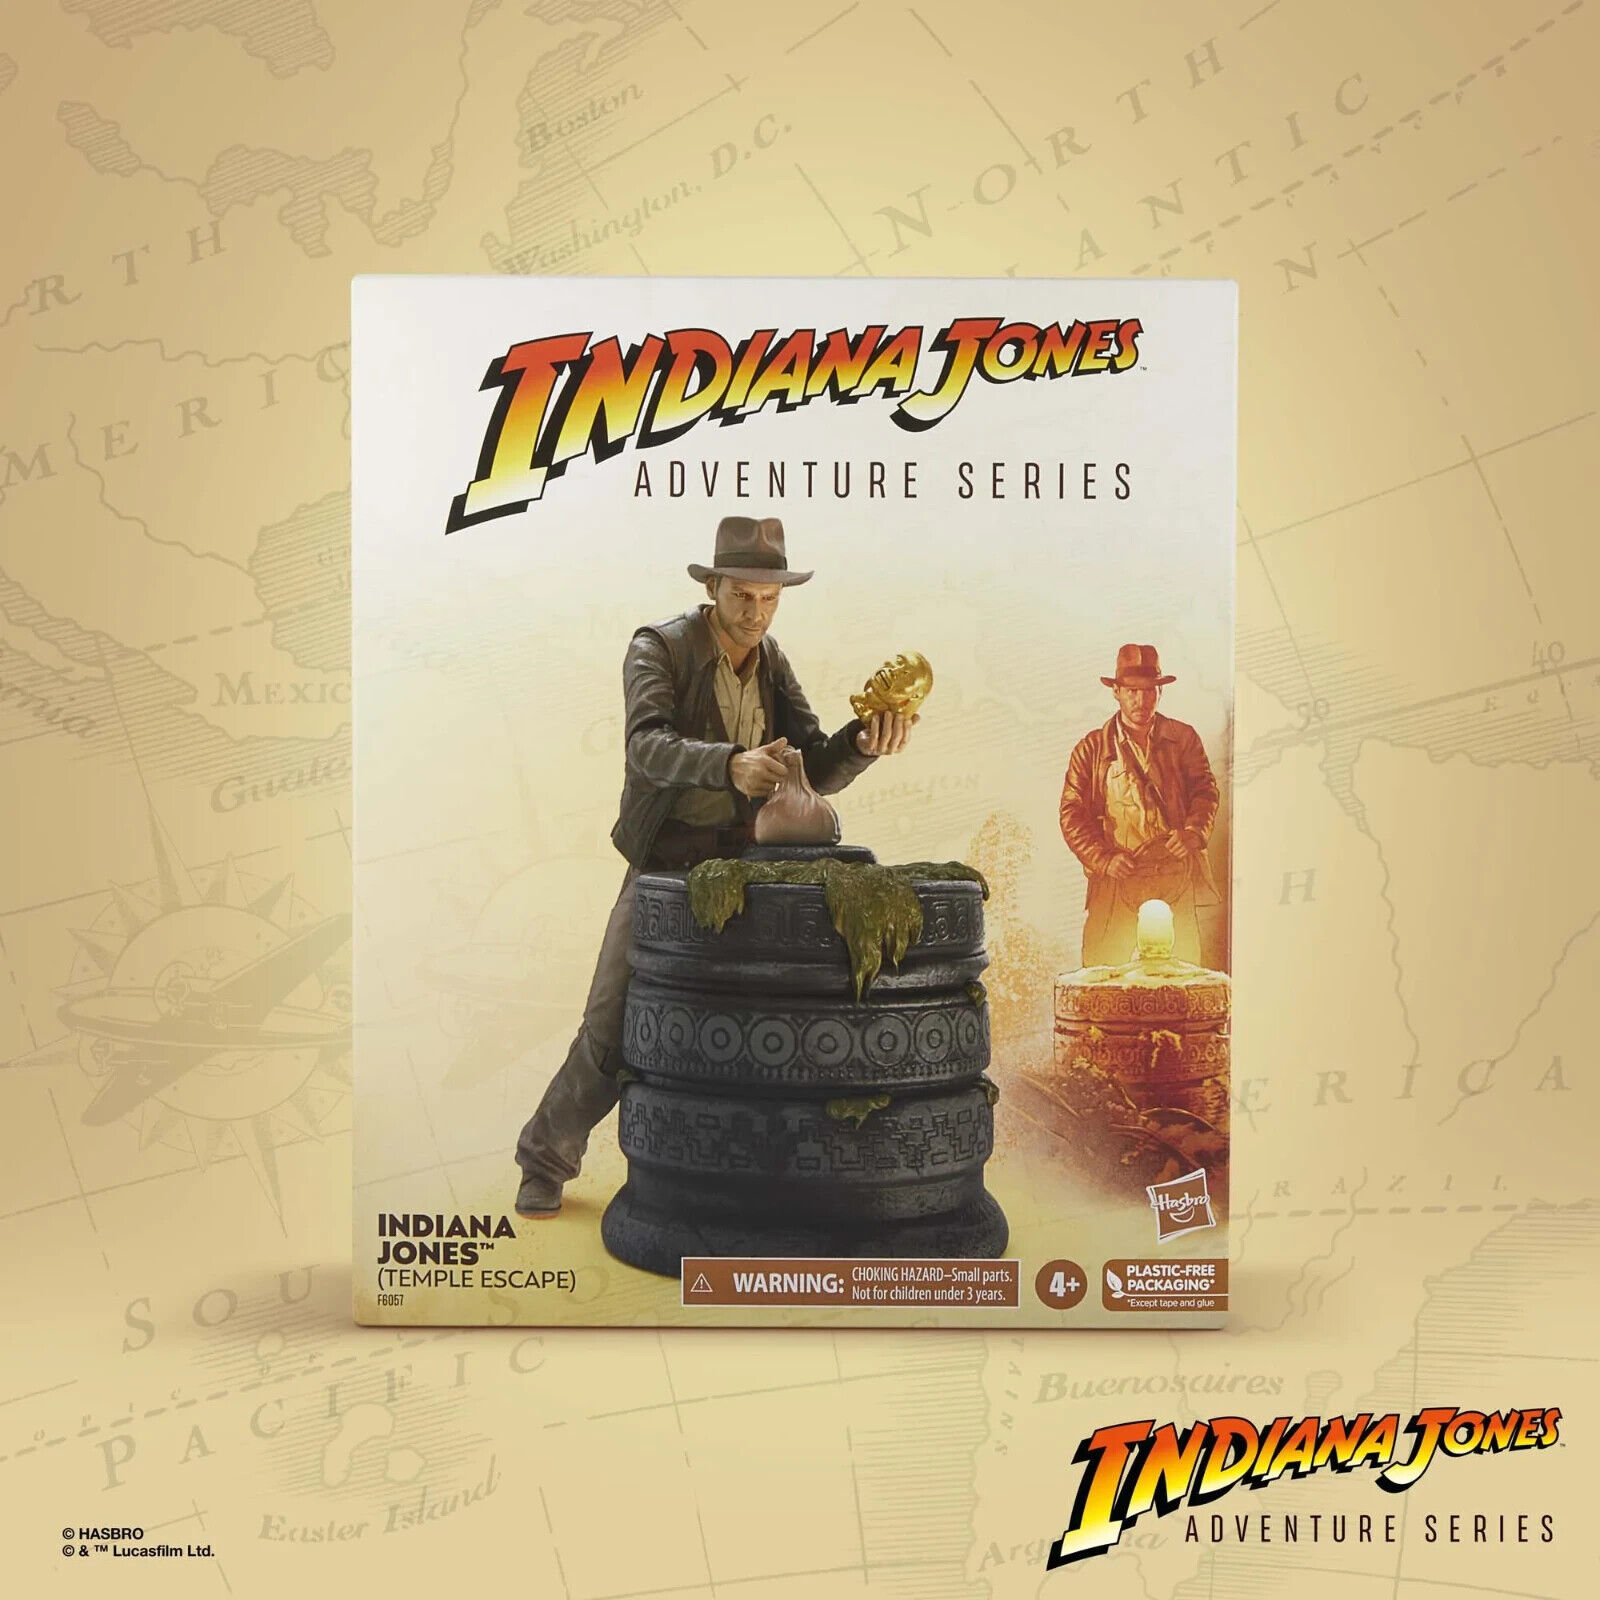 🔥Indiana Jones Adventure Series- Indiana Jones Temple Escape EXCLUSIVE🔥 